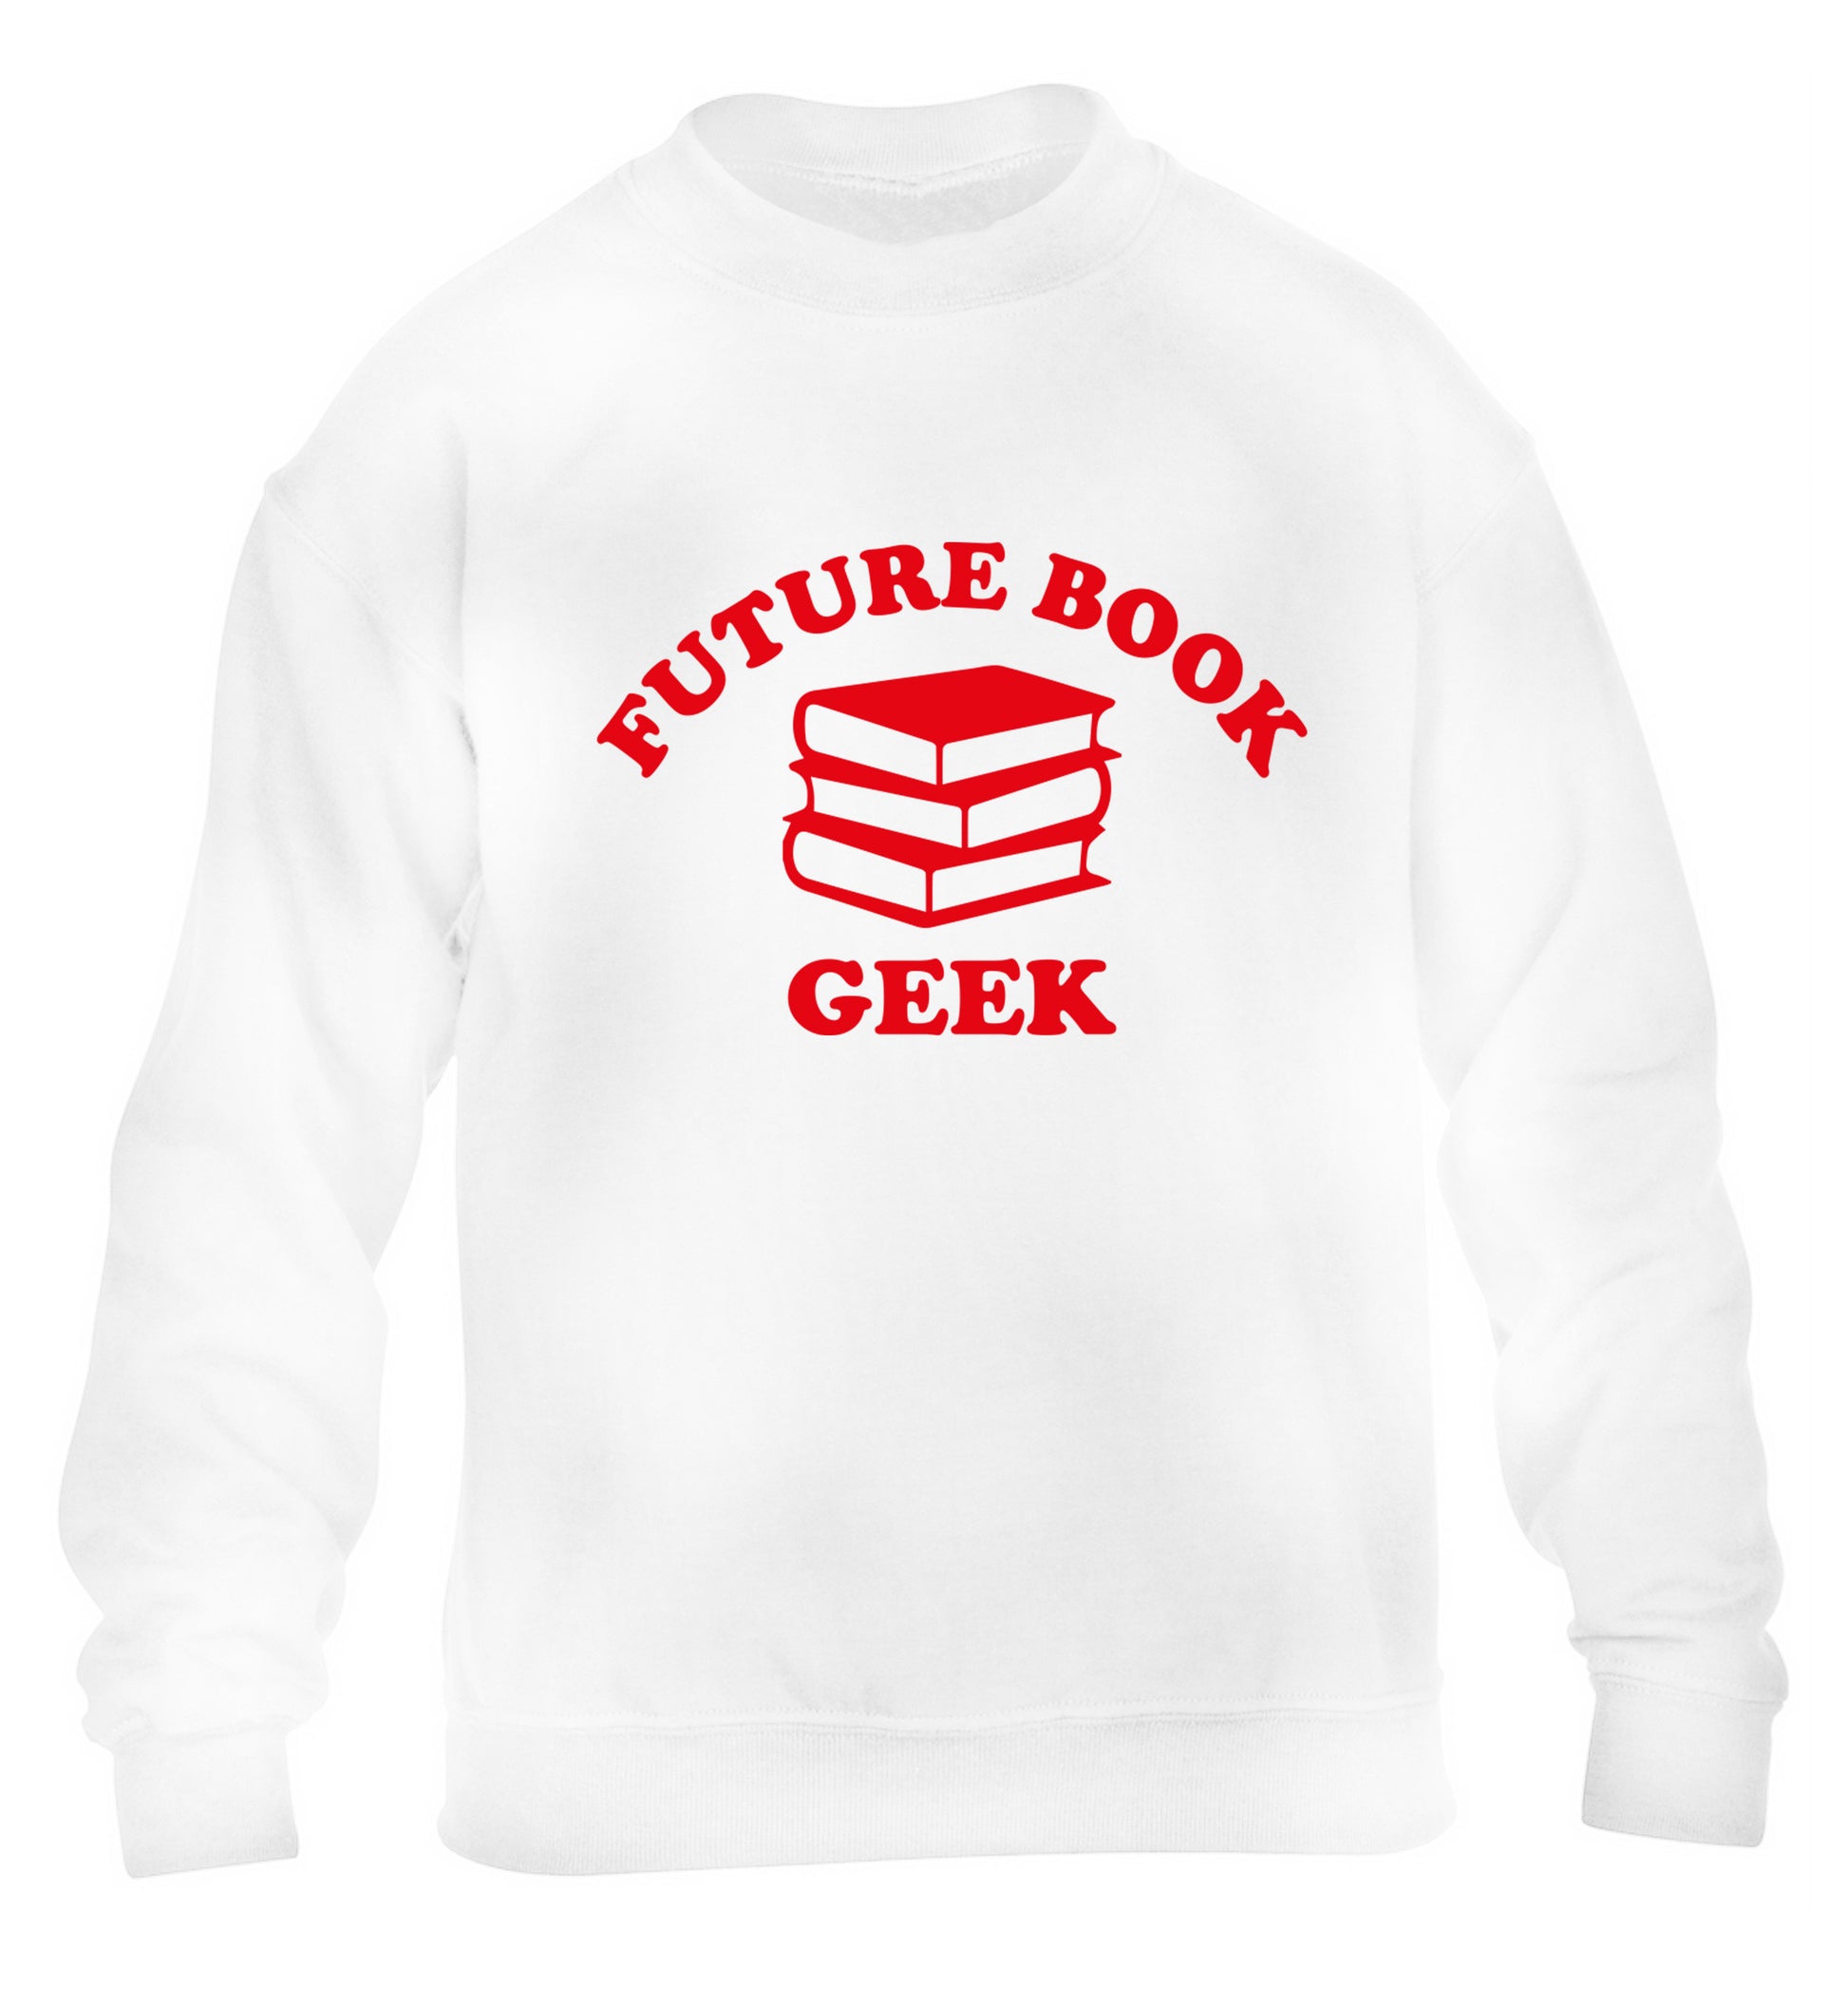 Future book geek children's white sweater 12-14 Years